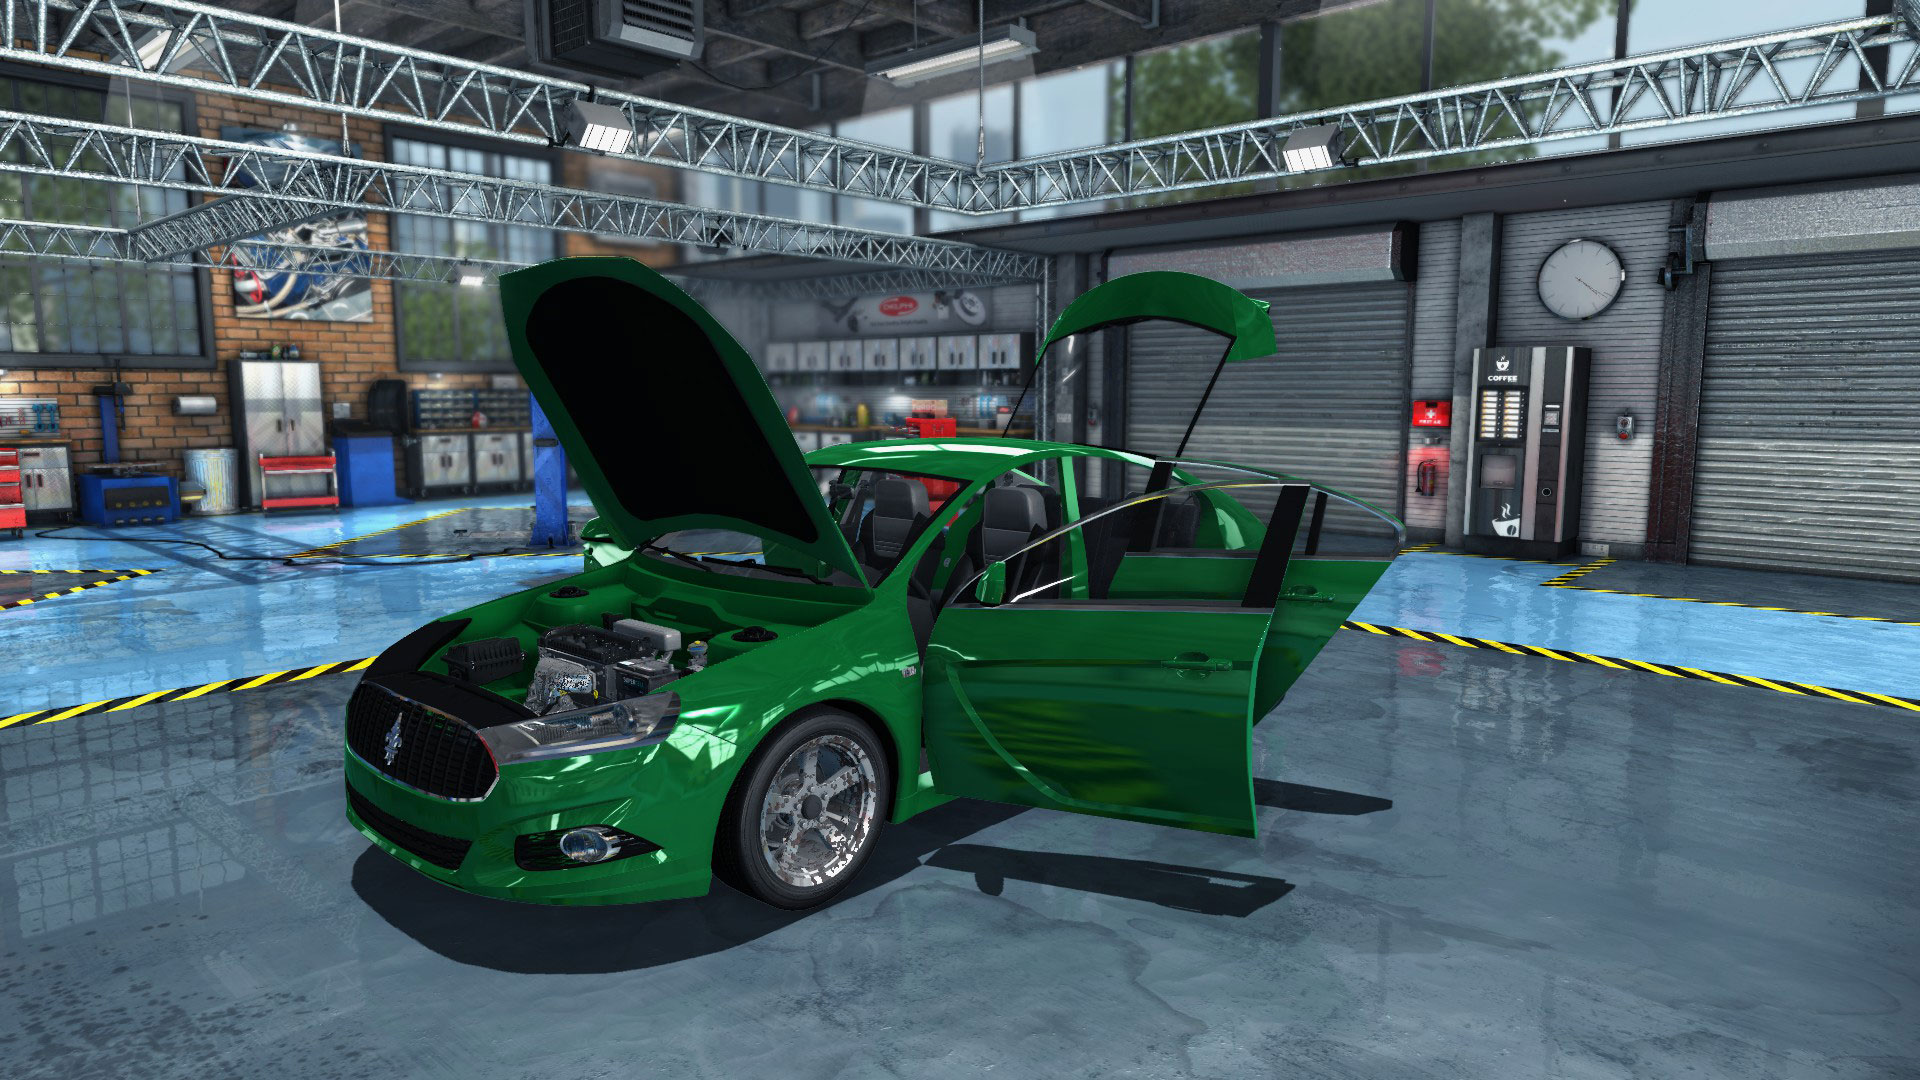 Кар механик 2015. Car Mechanic Simulator 2015. Car Mechanic Simulator 2015 машины. Car Mechanic Simulator Simulator 2015. Кар механик симулятор 2015.